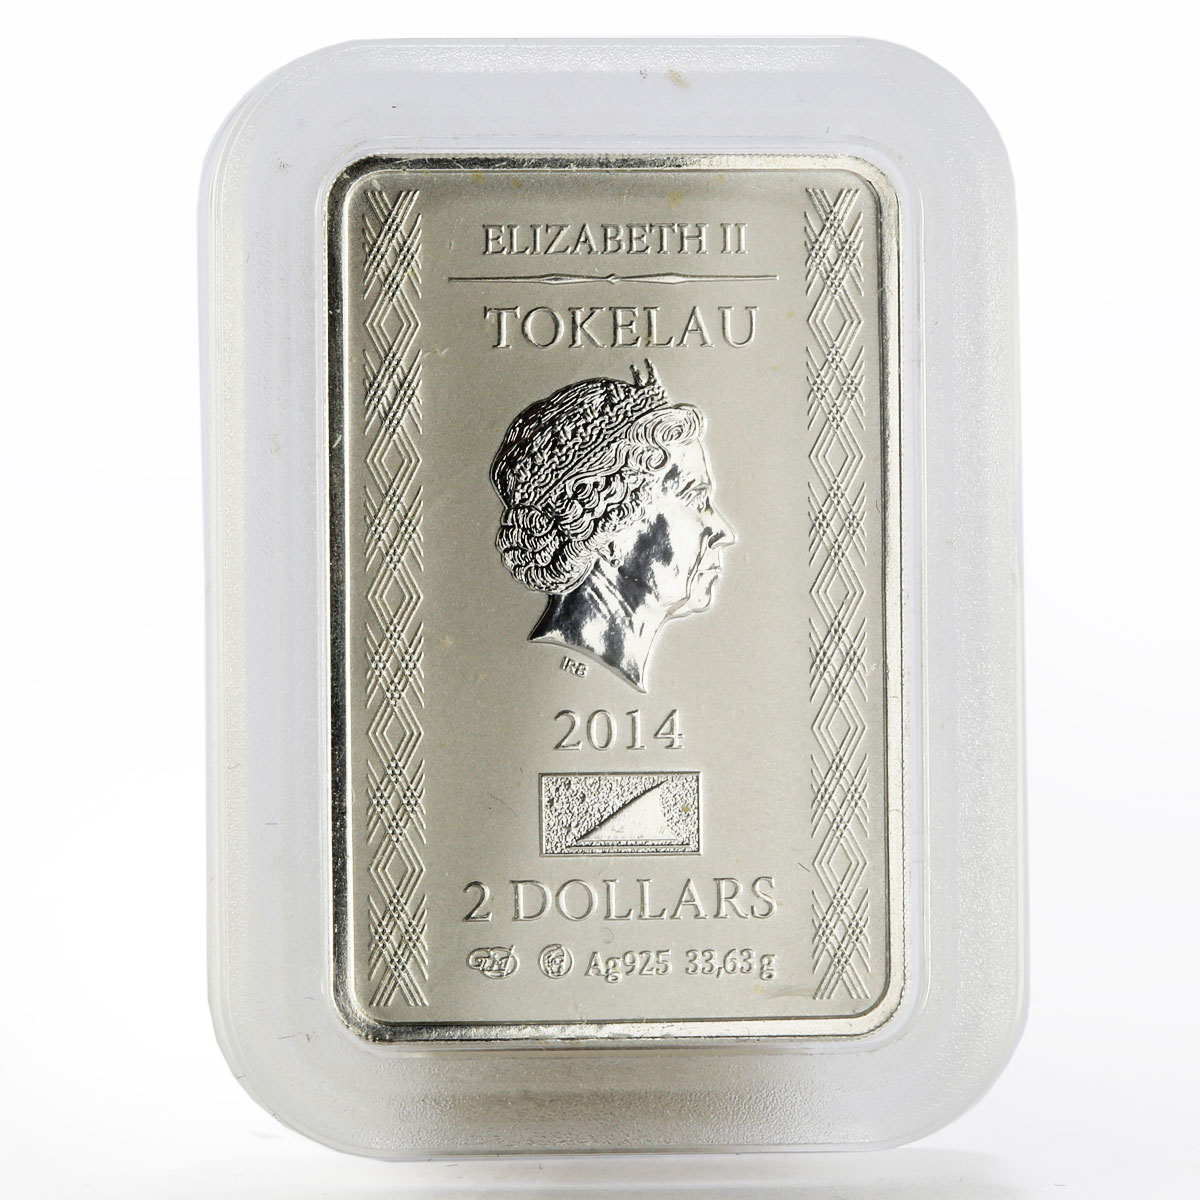 Tokelau 2 dollars Folk Crafts series Zhostovo silver coin 2014